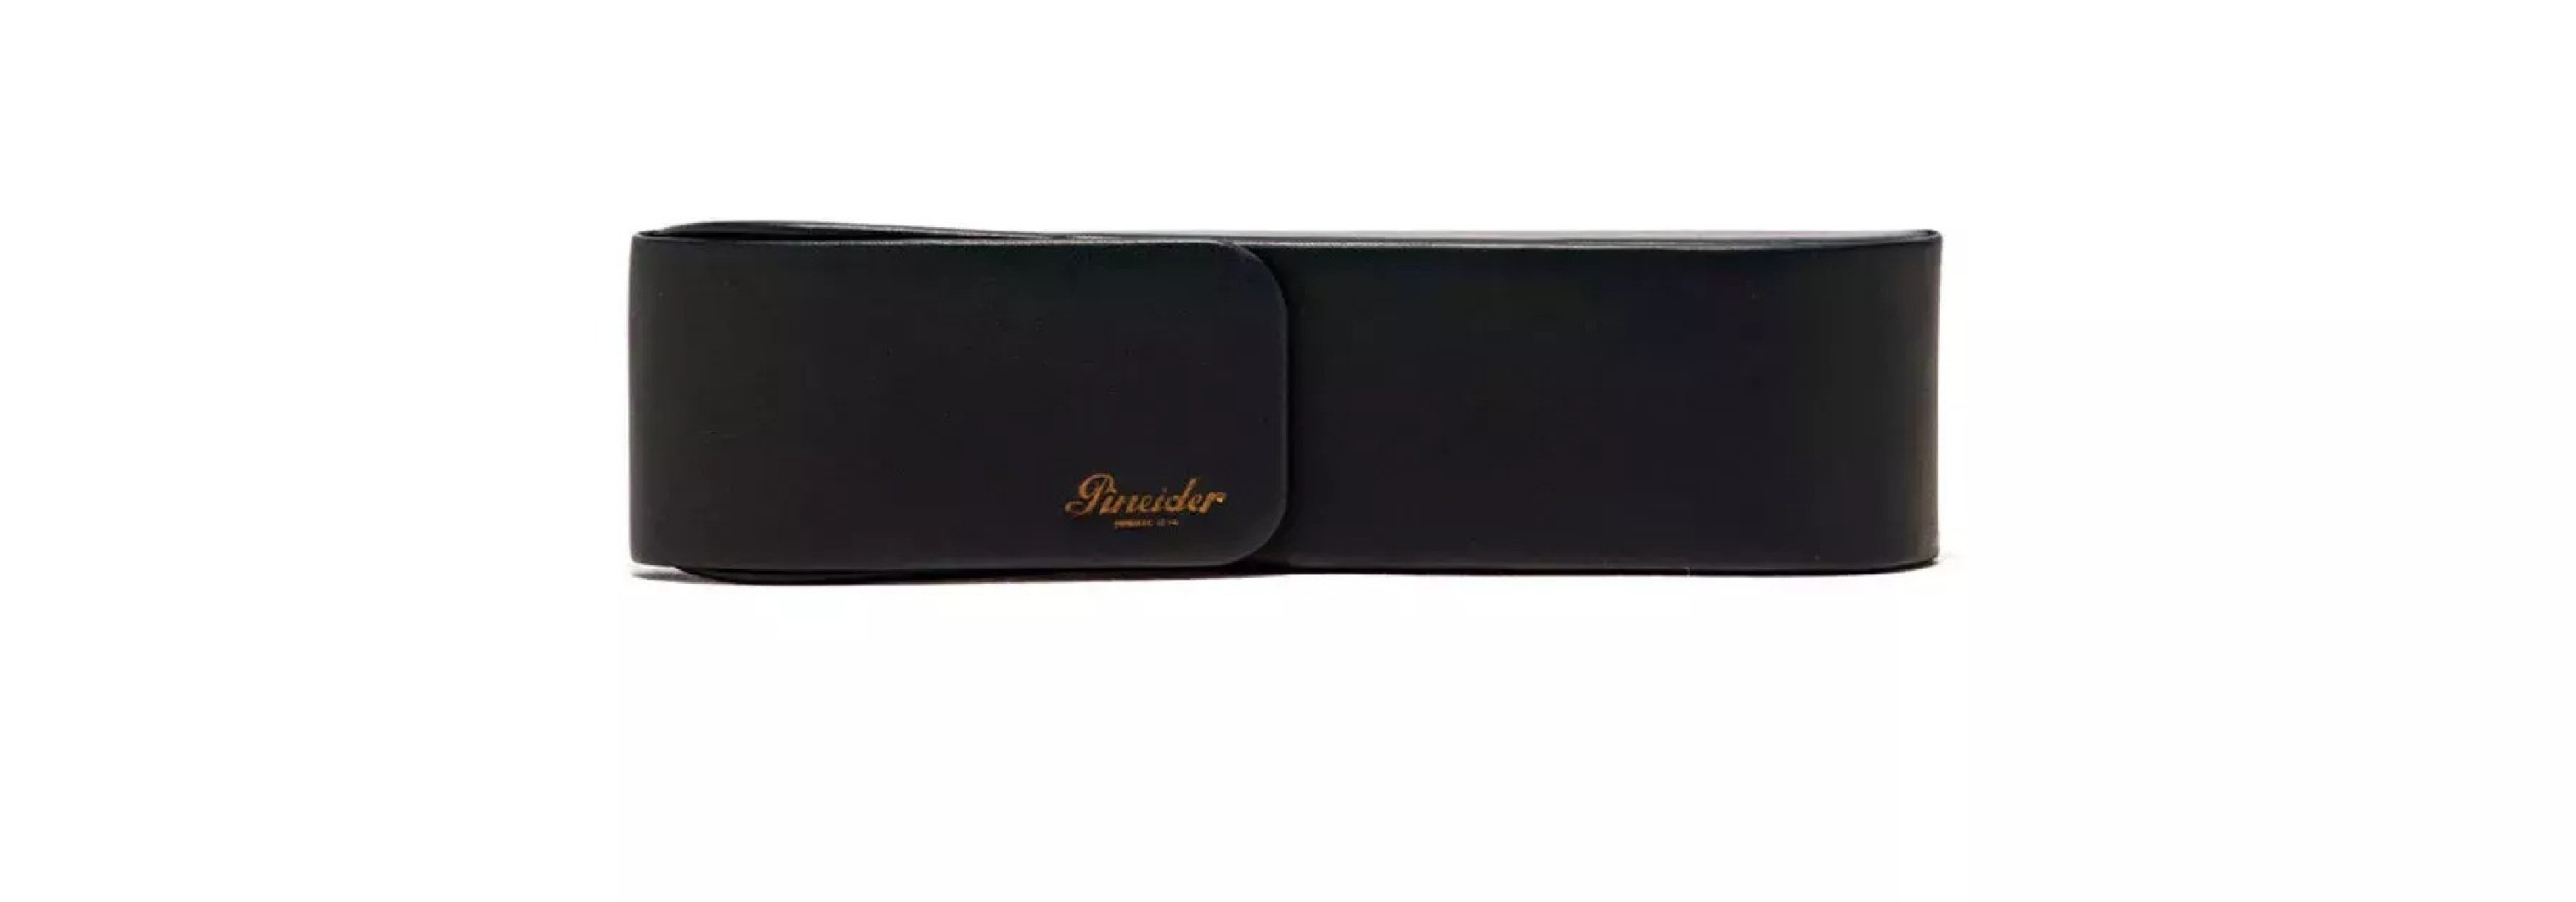 Pineider leather case black for 1 pens